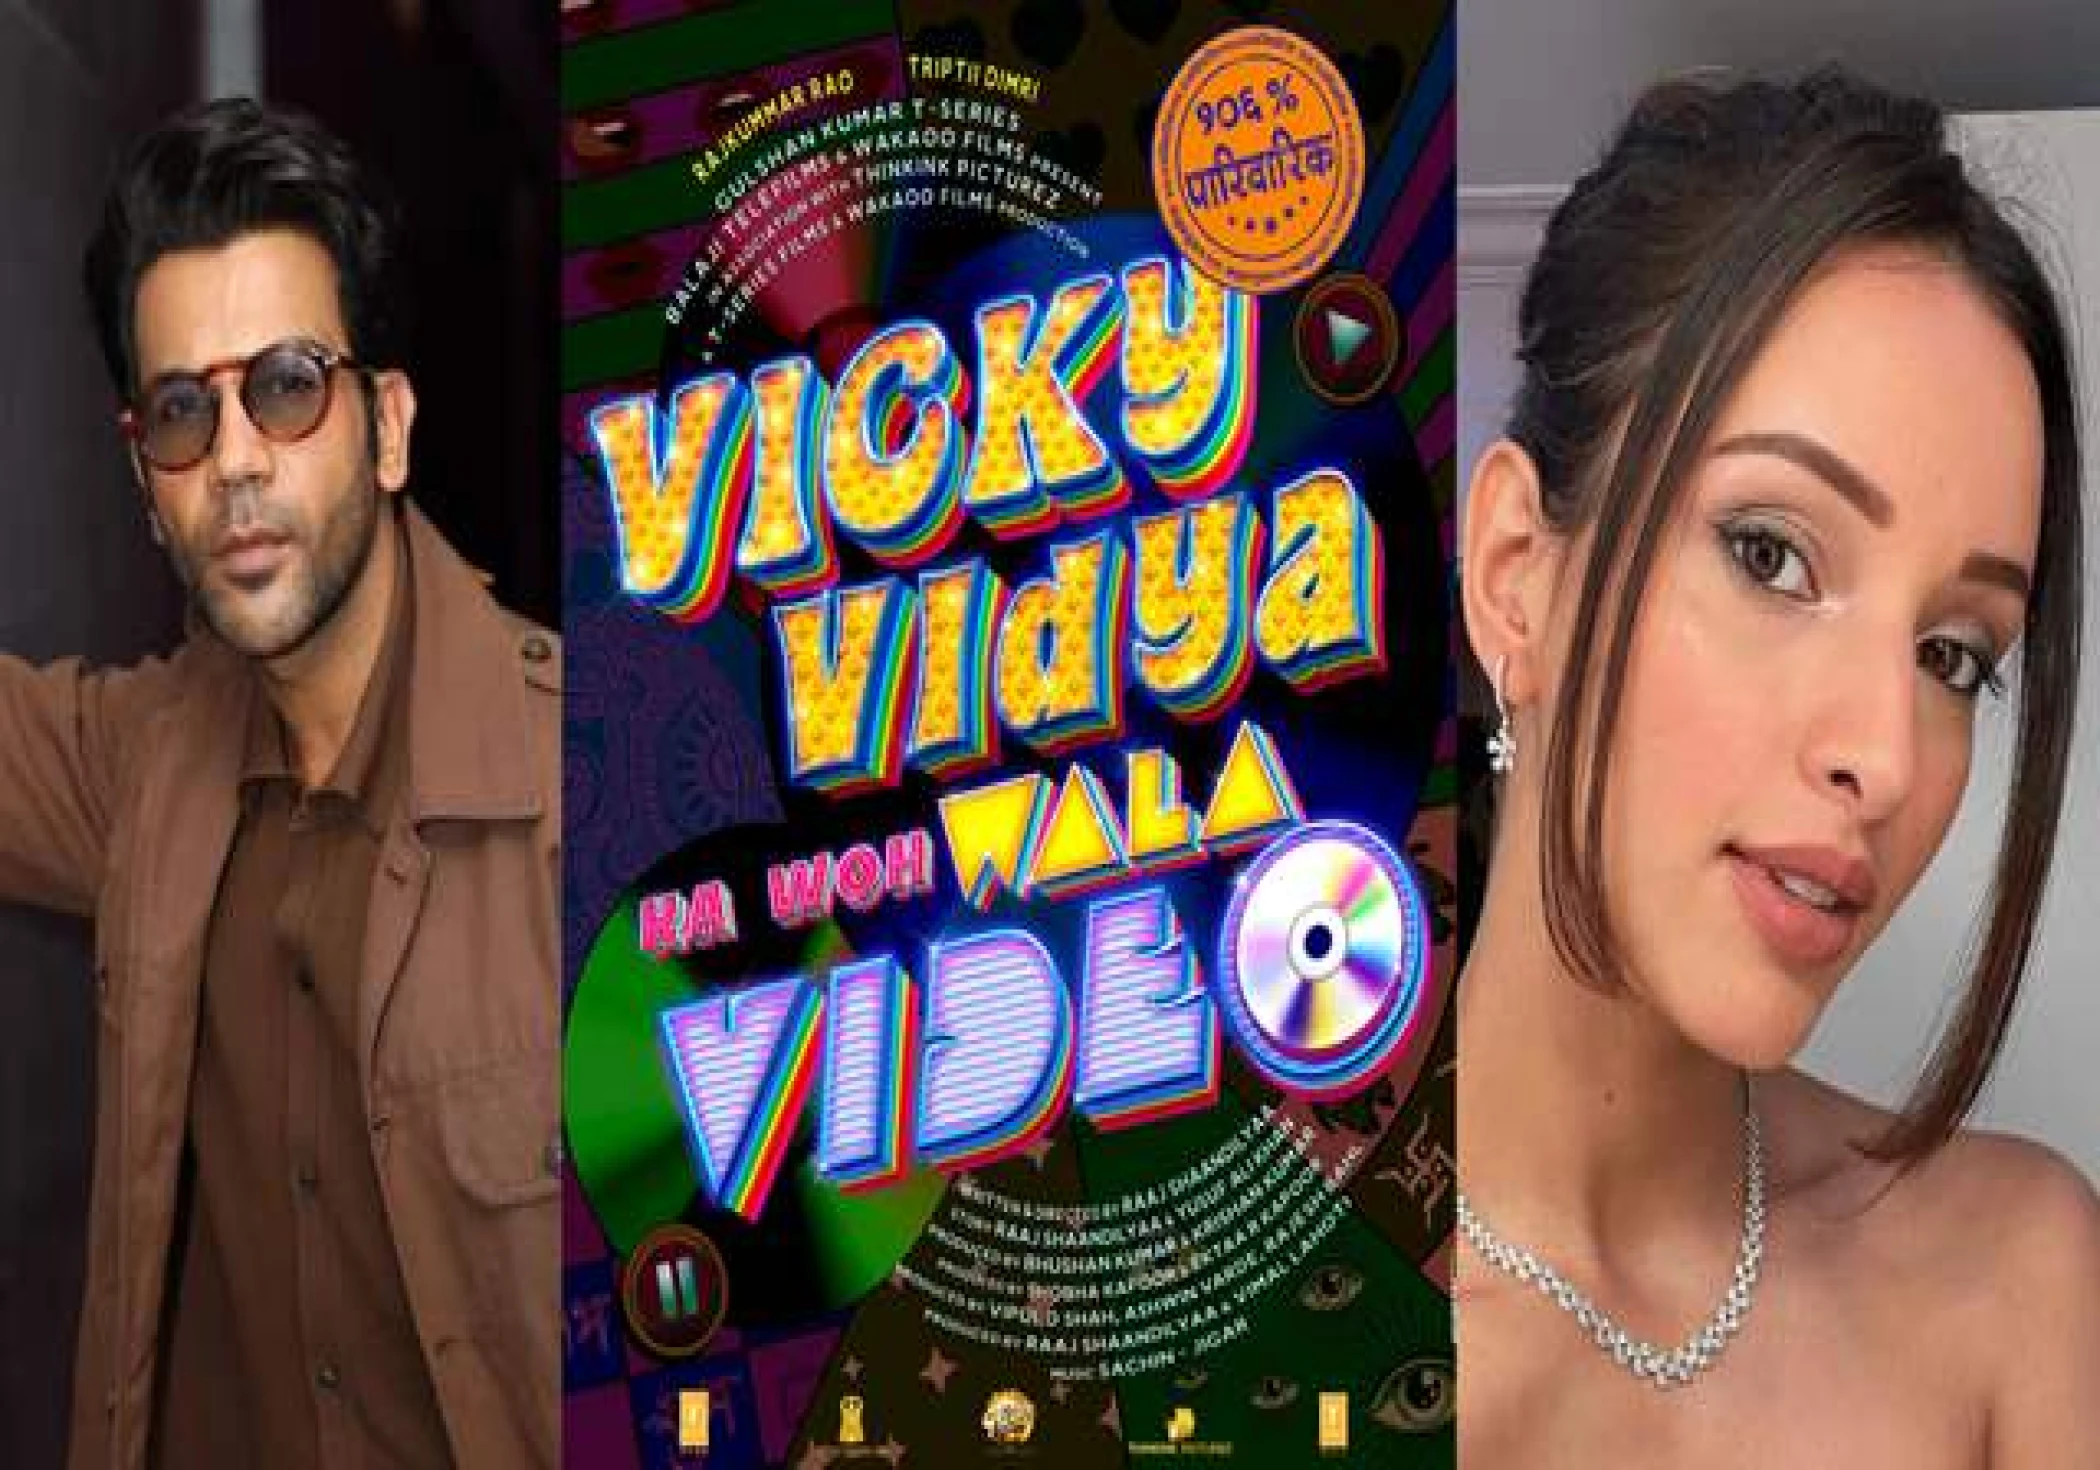 Rajkumar Vicky Vidya Ka Woh Wala Video: Rao and Tripti Dimri to Team Up in Raj Shandilya's Hilarious Comedy